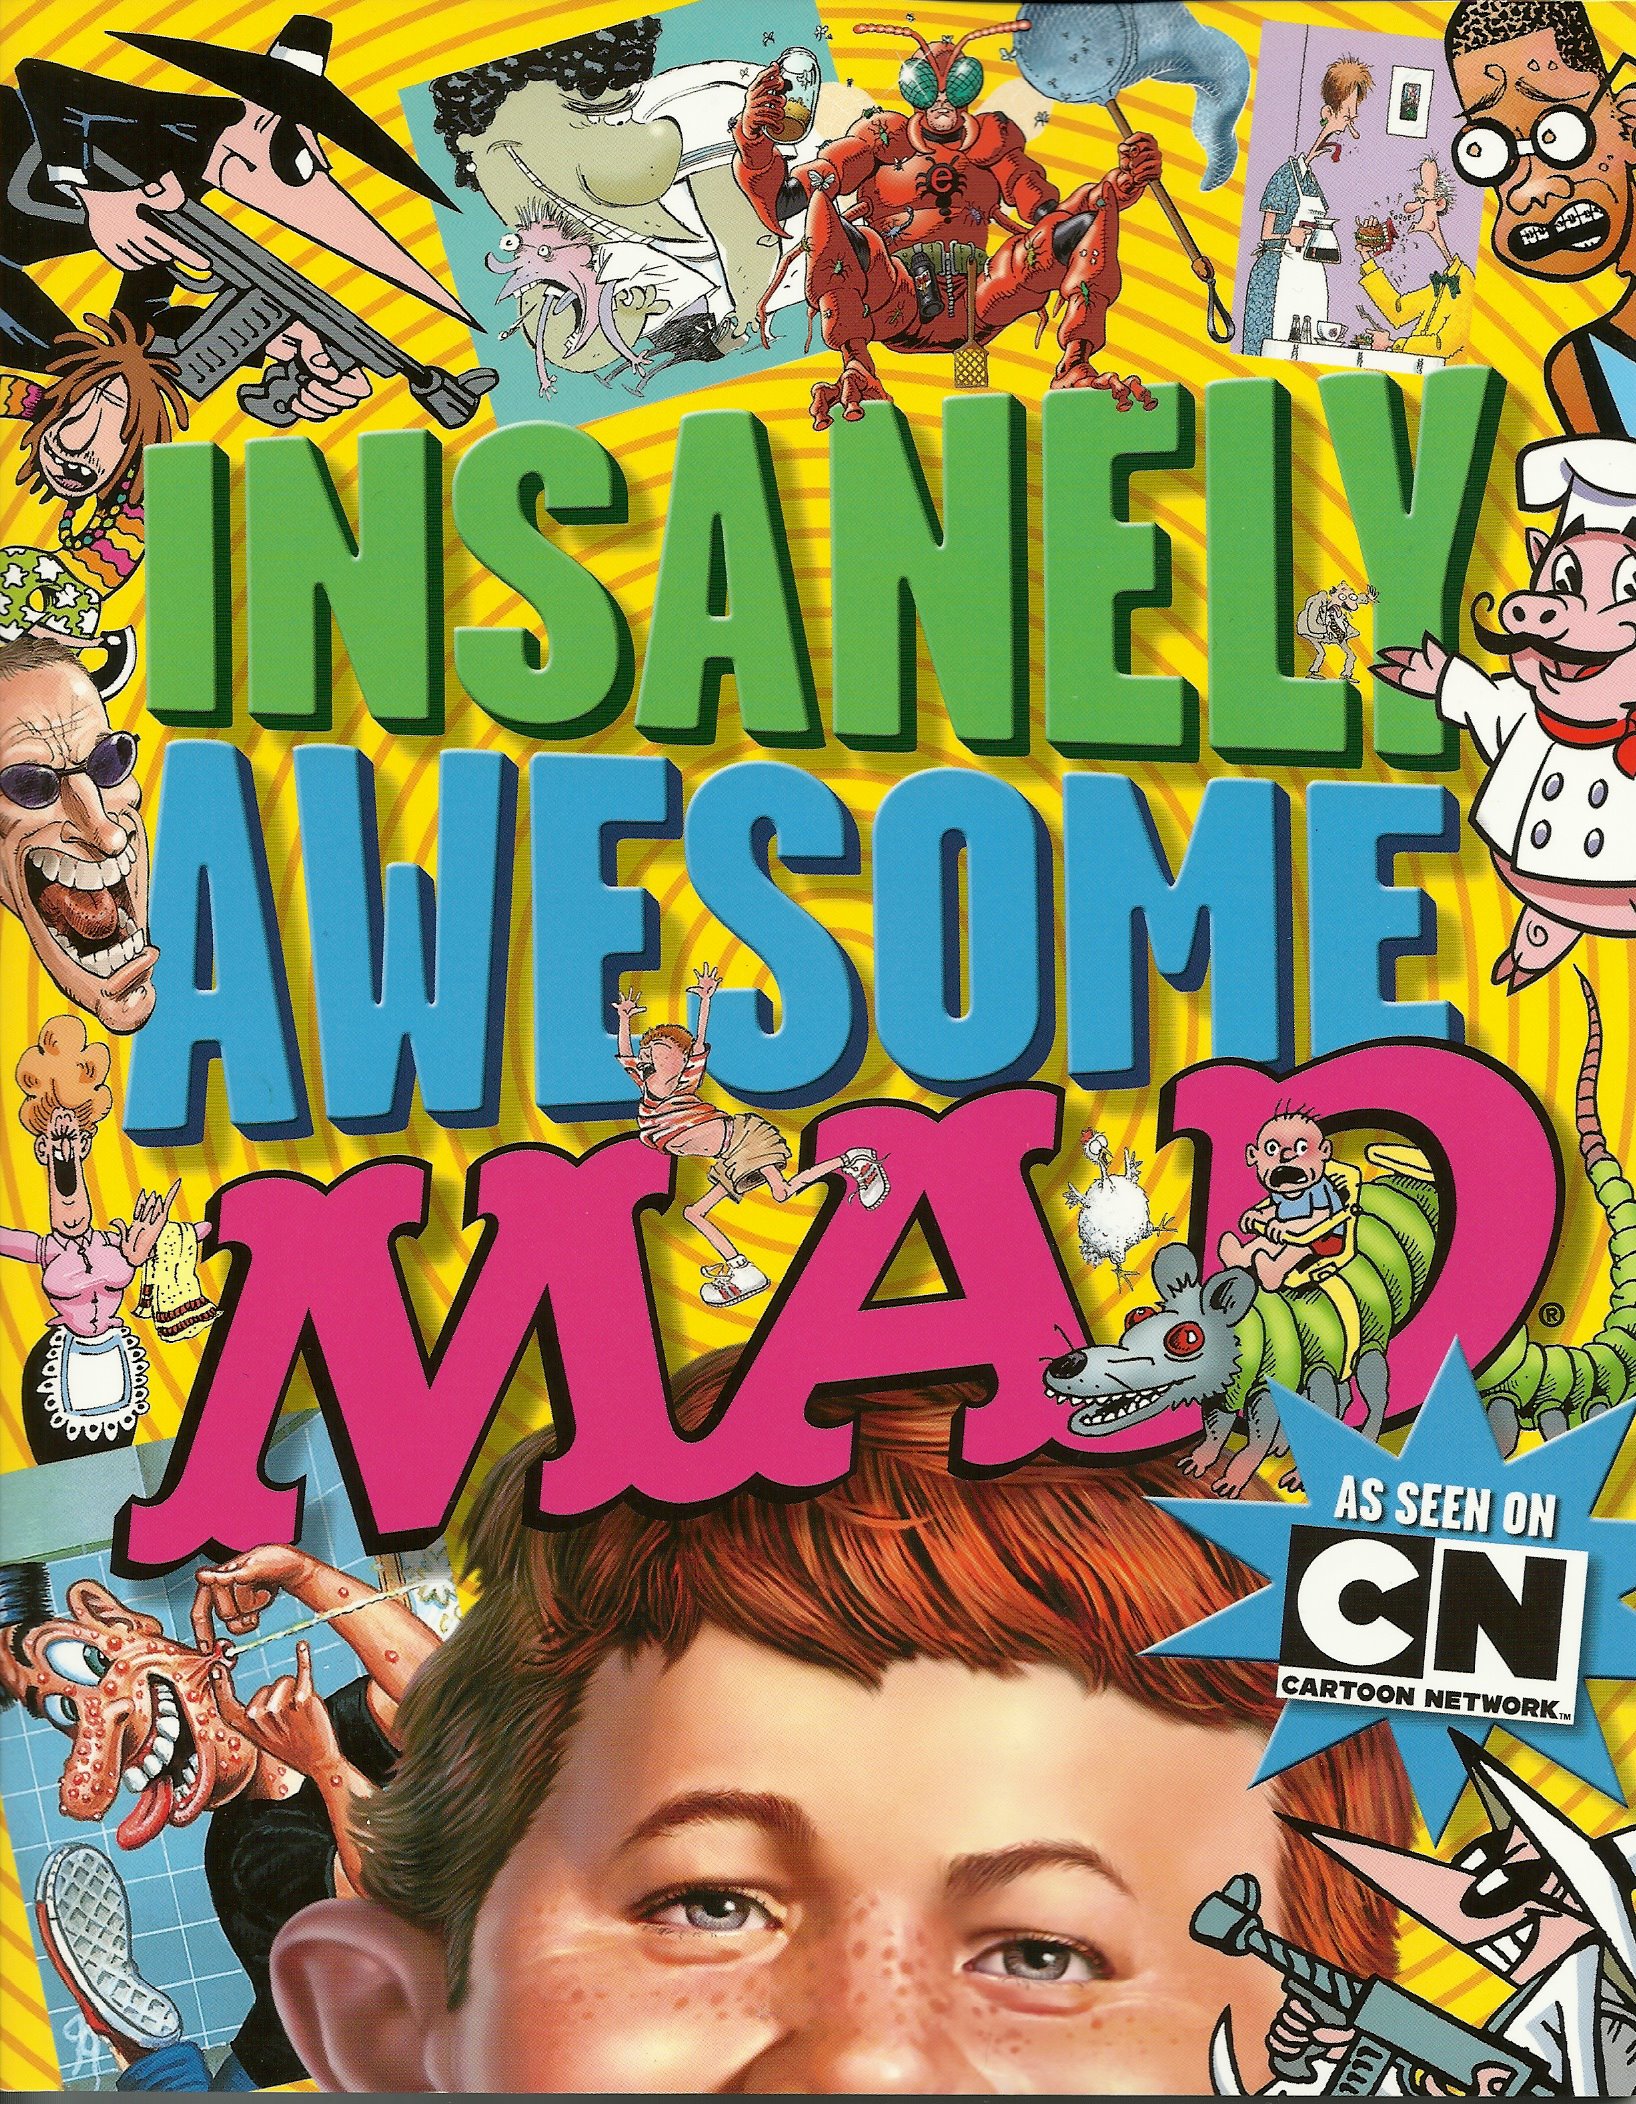 Category:Book | Mad Cartoon Network Wiki | FANDOM powered by Wikia